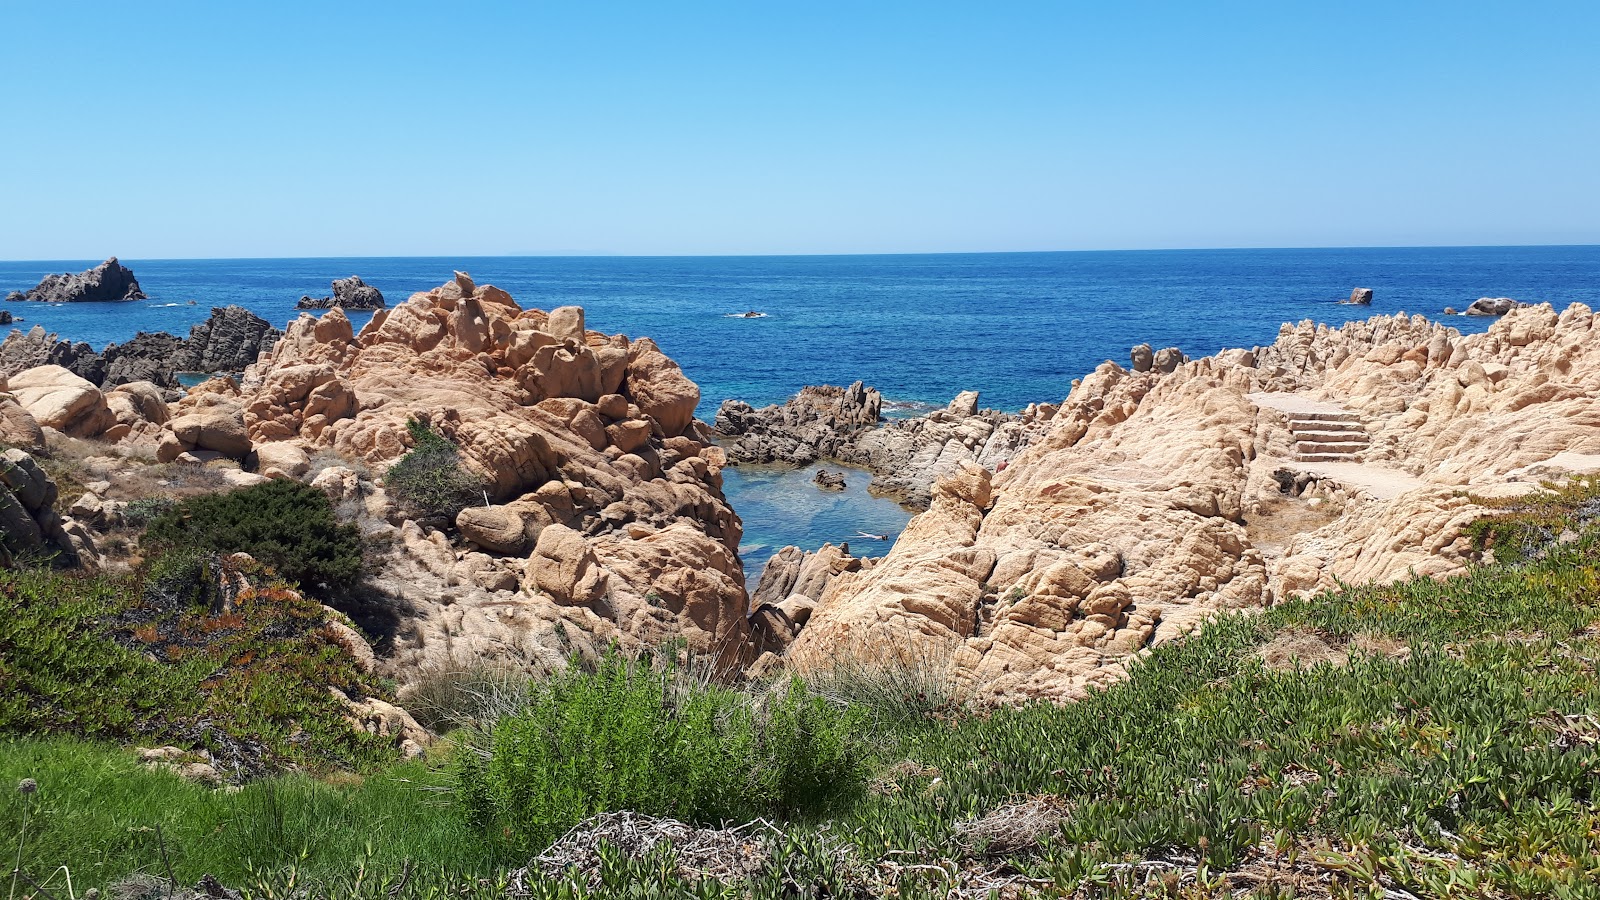 Foto av Spiaggia Li Baietti med stenar yta